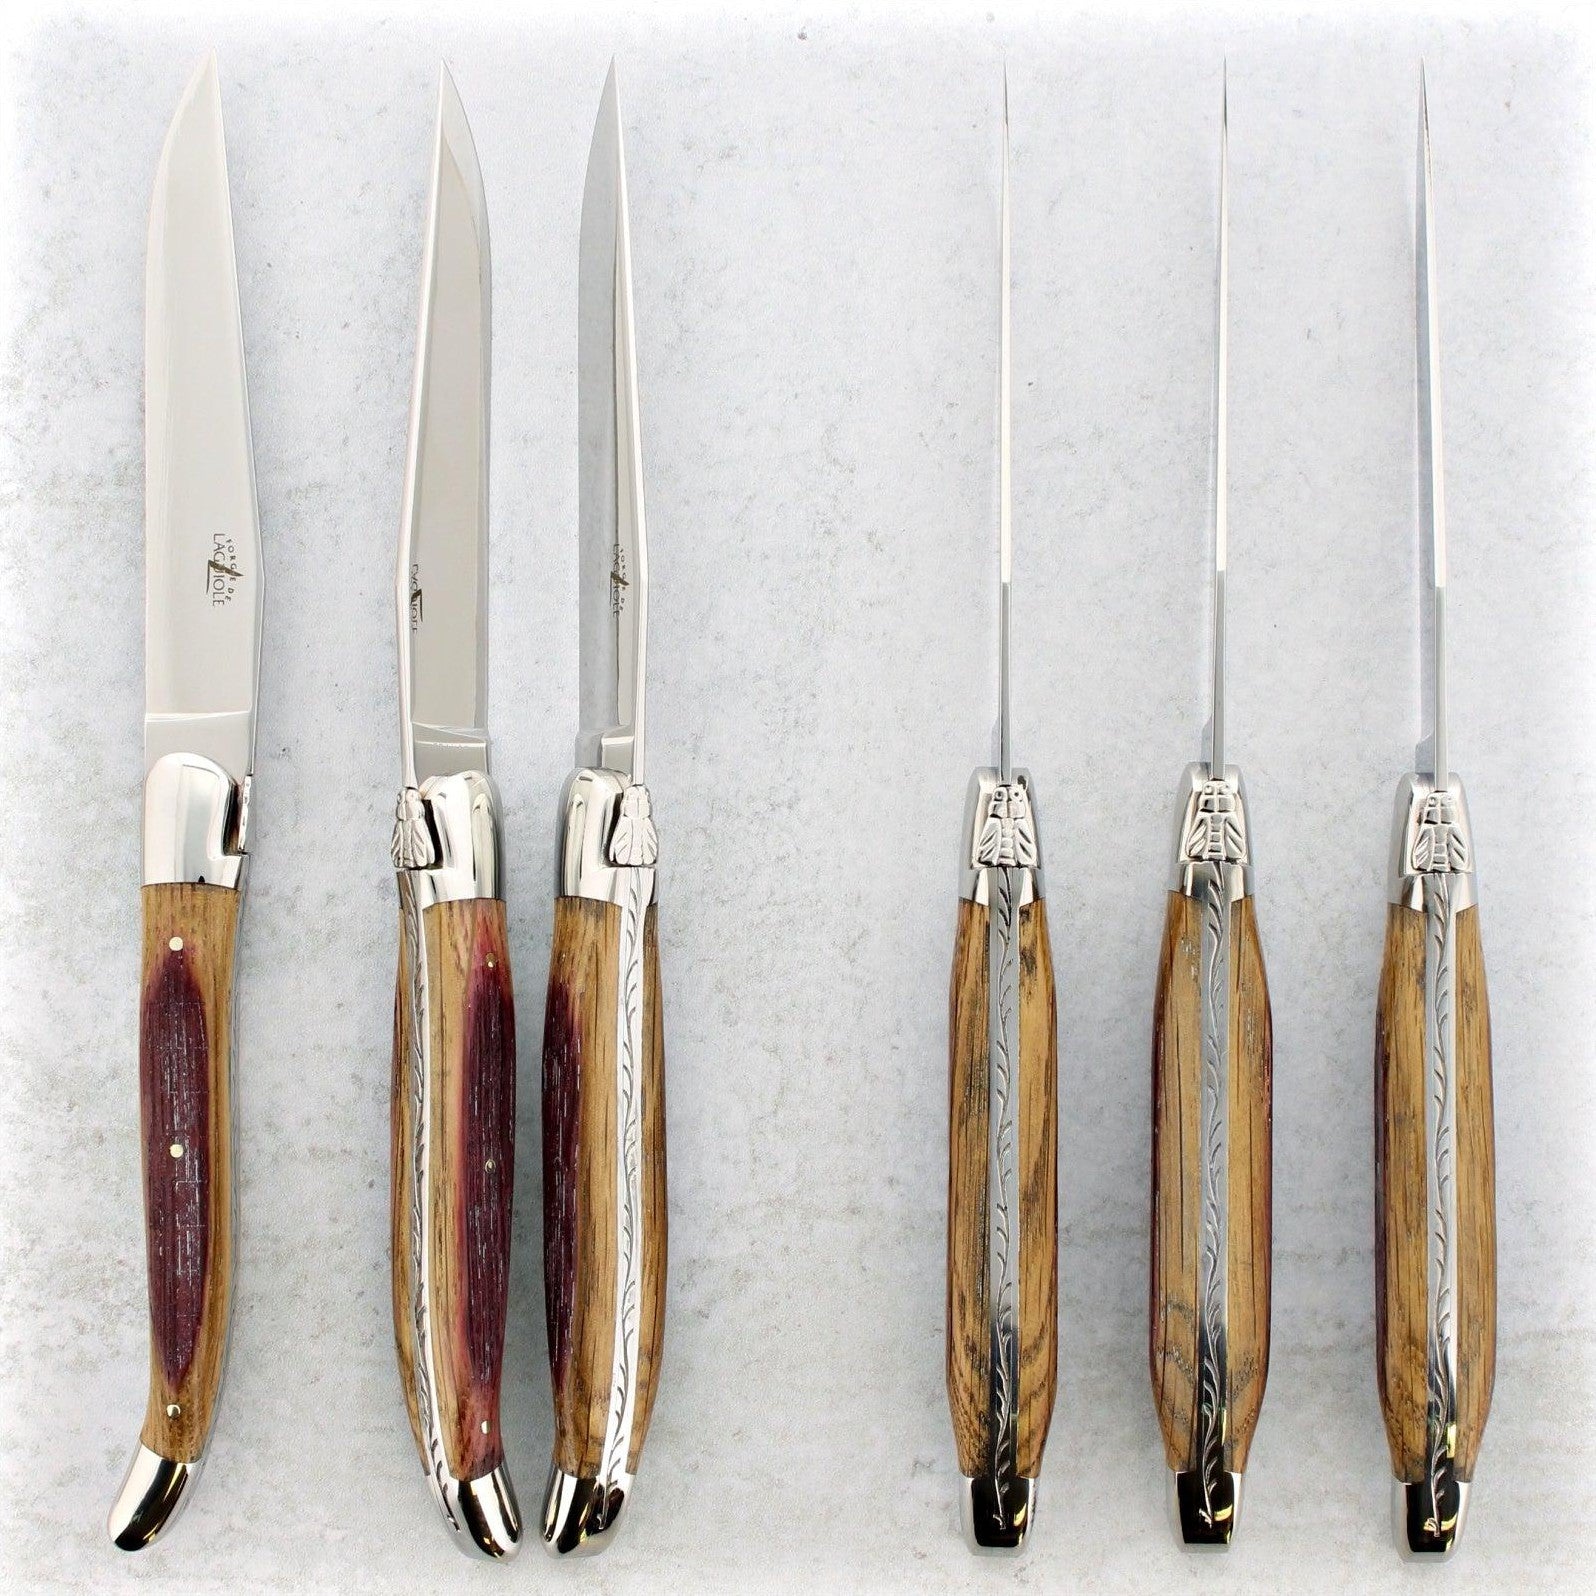 Cold Steel 100% Original Authentic Kitchen Classic 13 piece Knives Set